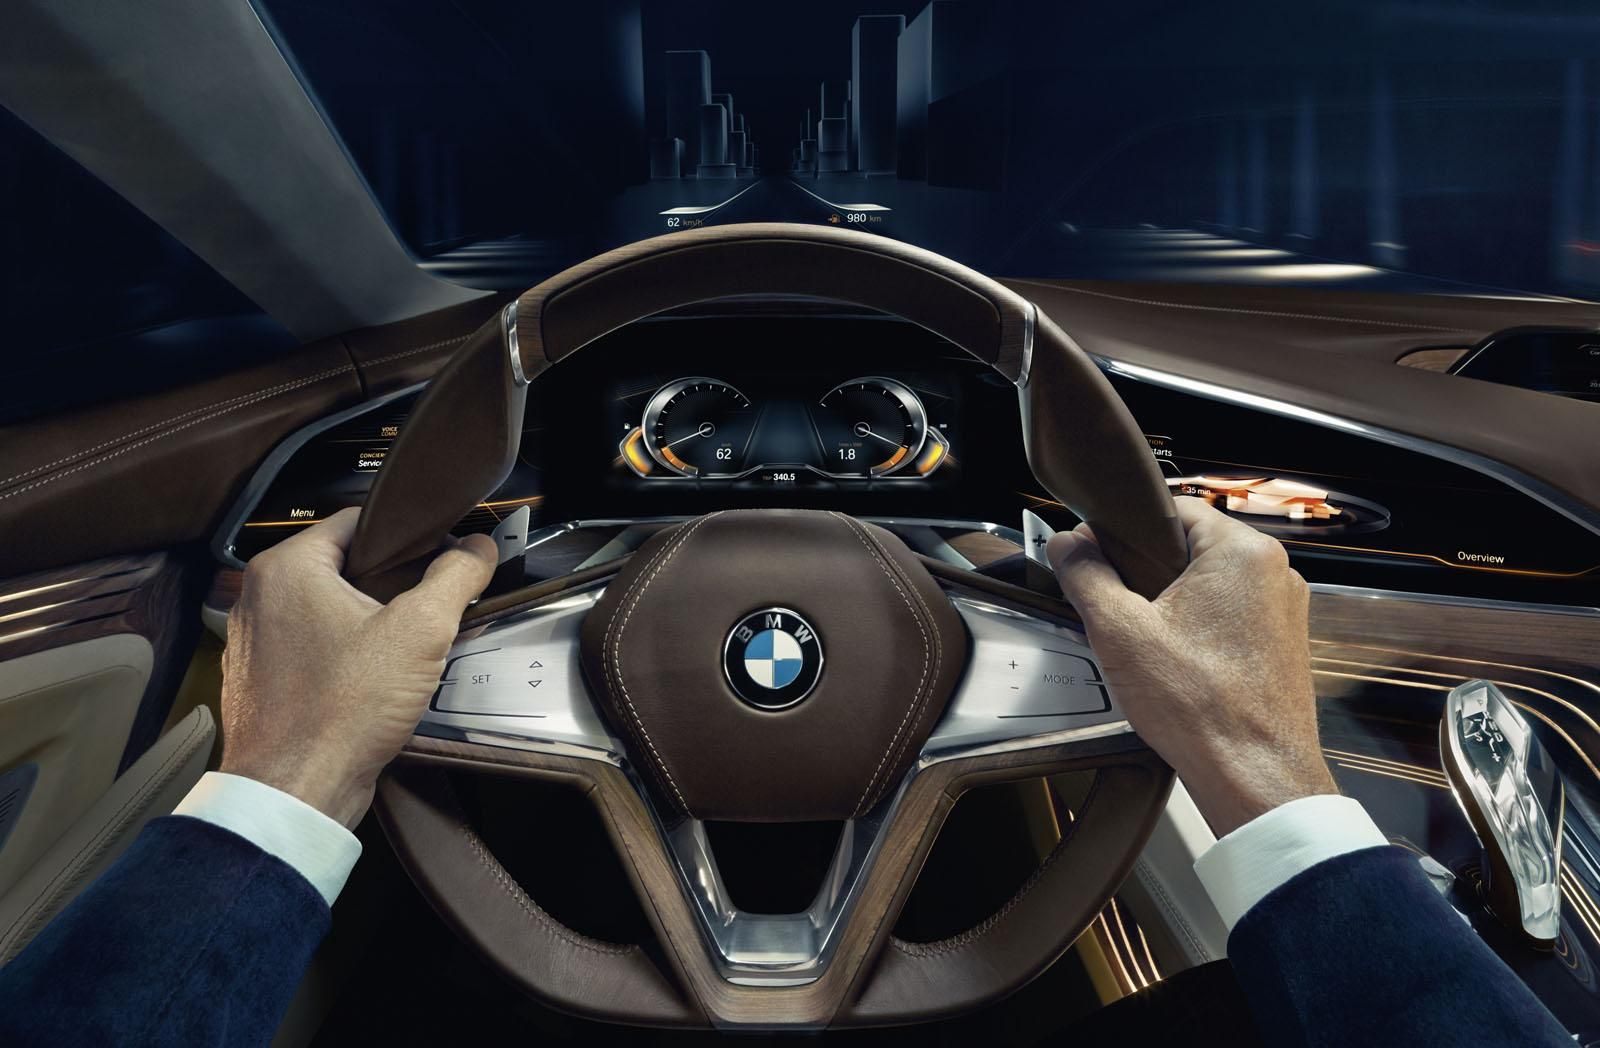 BMW VISION FUTURE LUXURY KONSEPT RESM GALERS